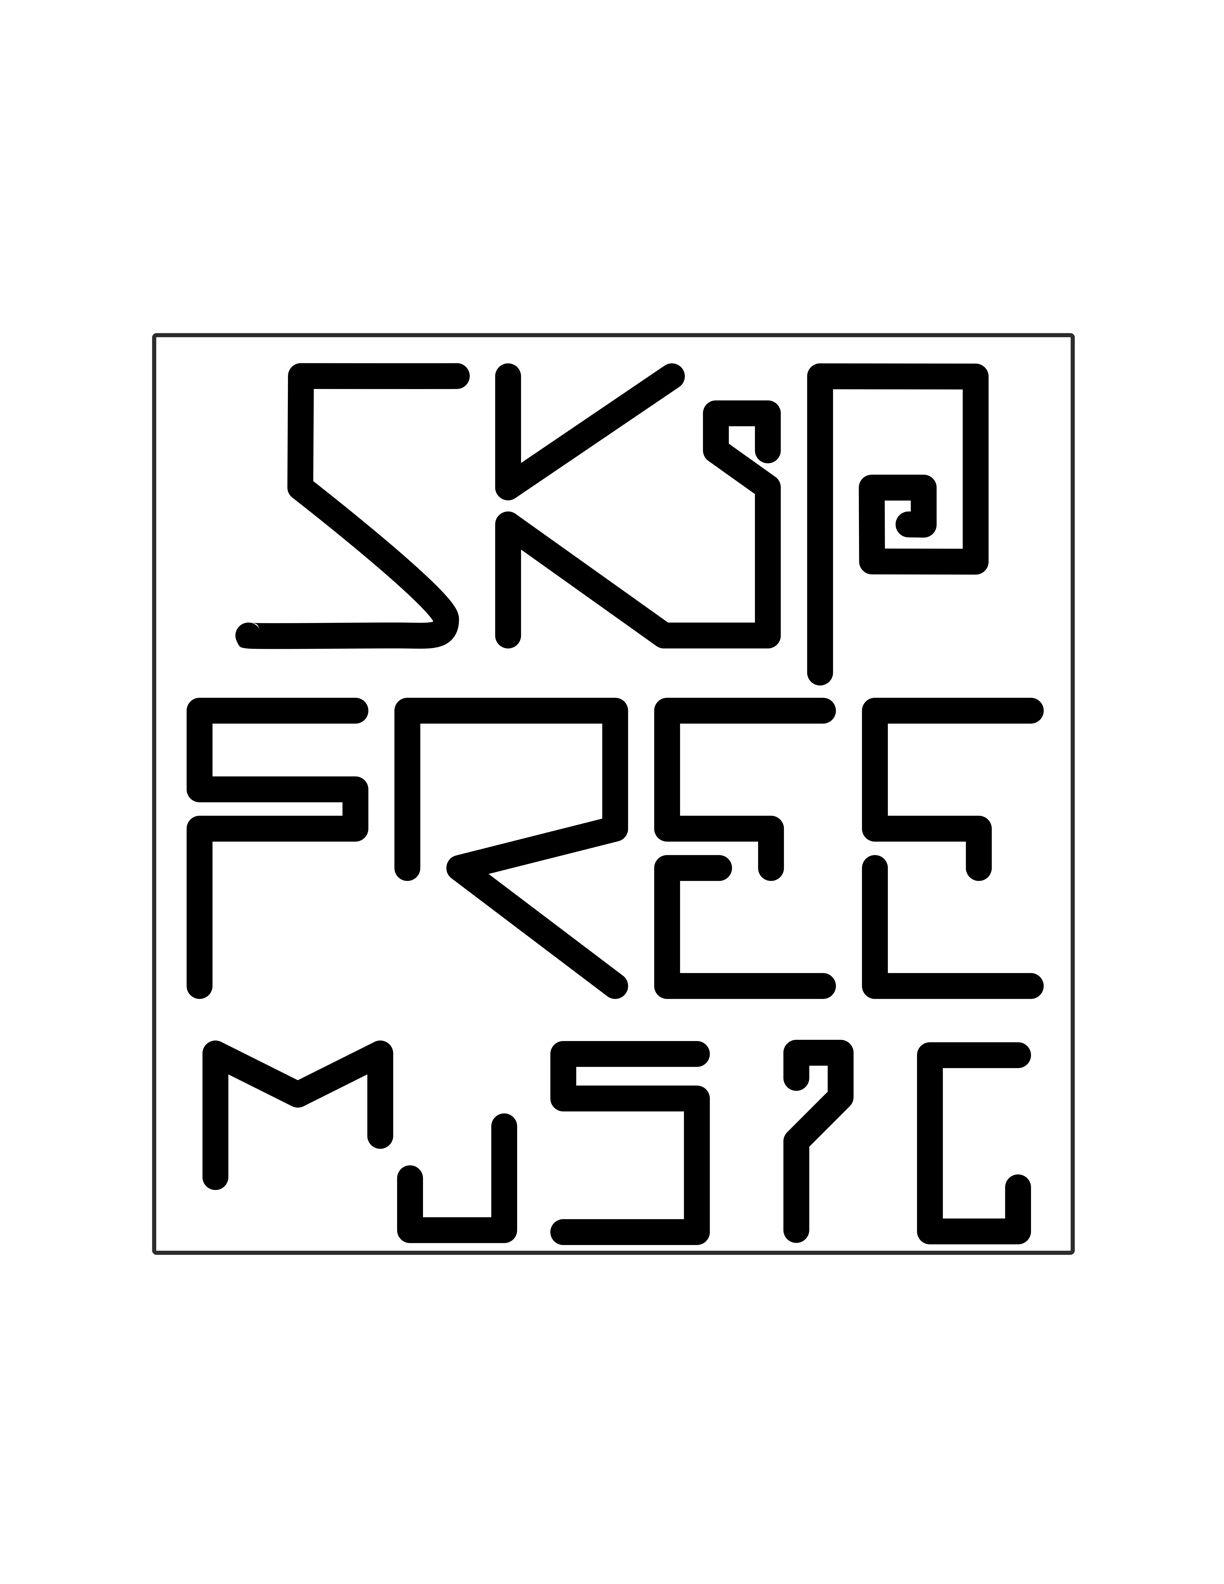 SkipFree_4_press Logo